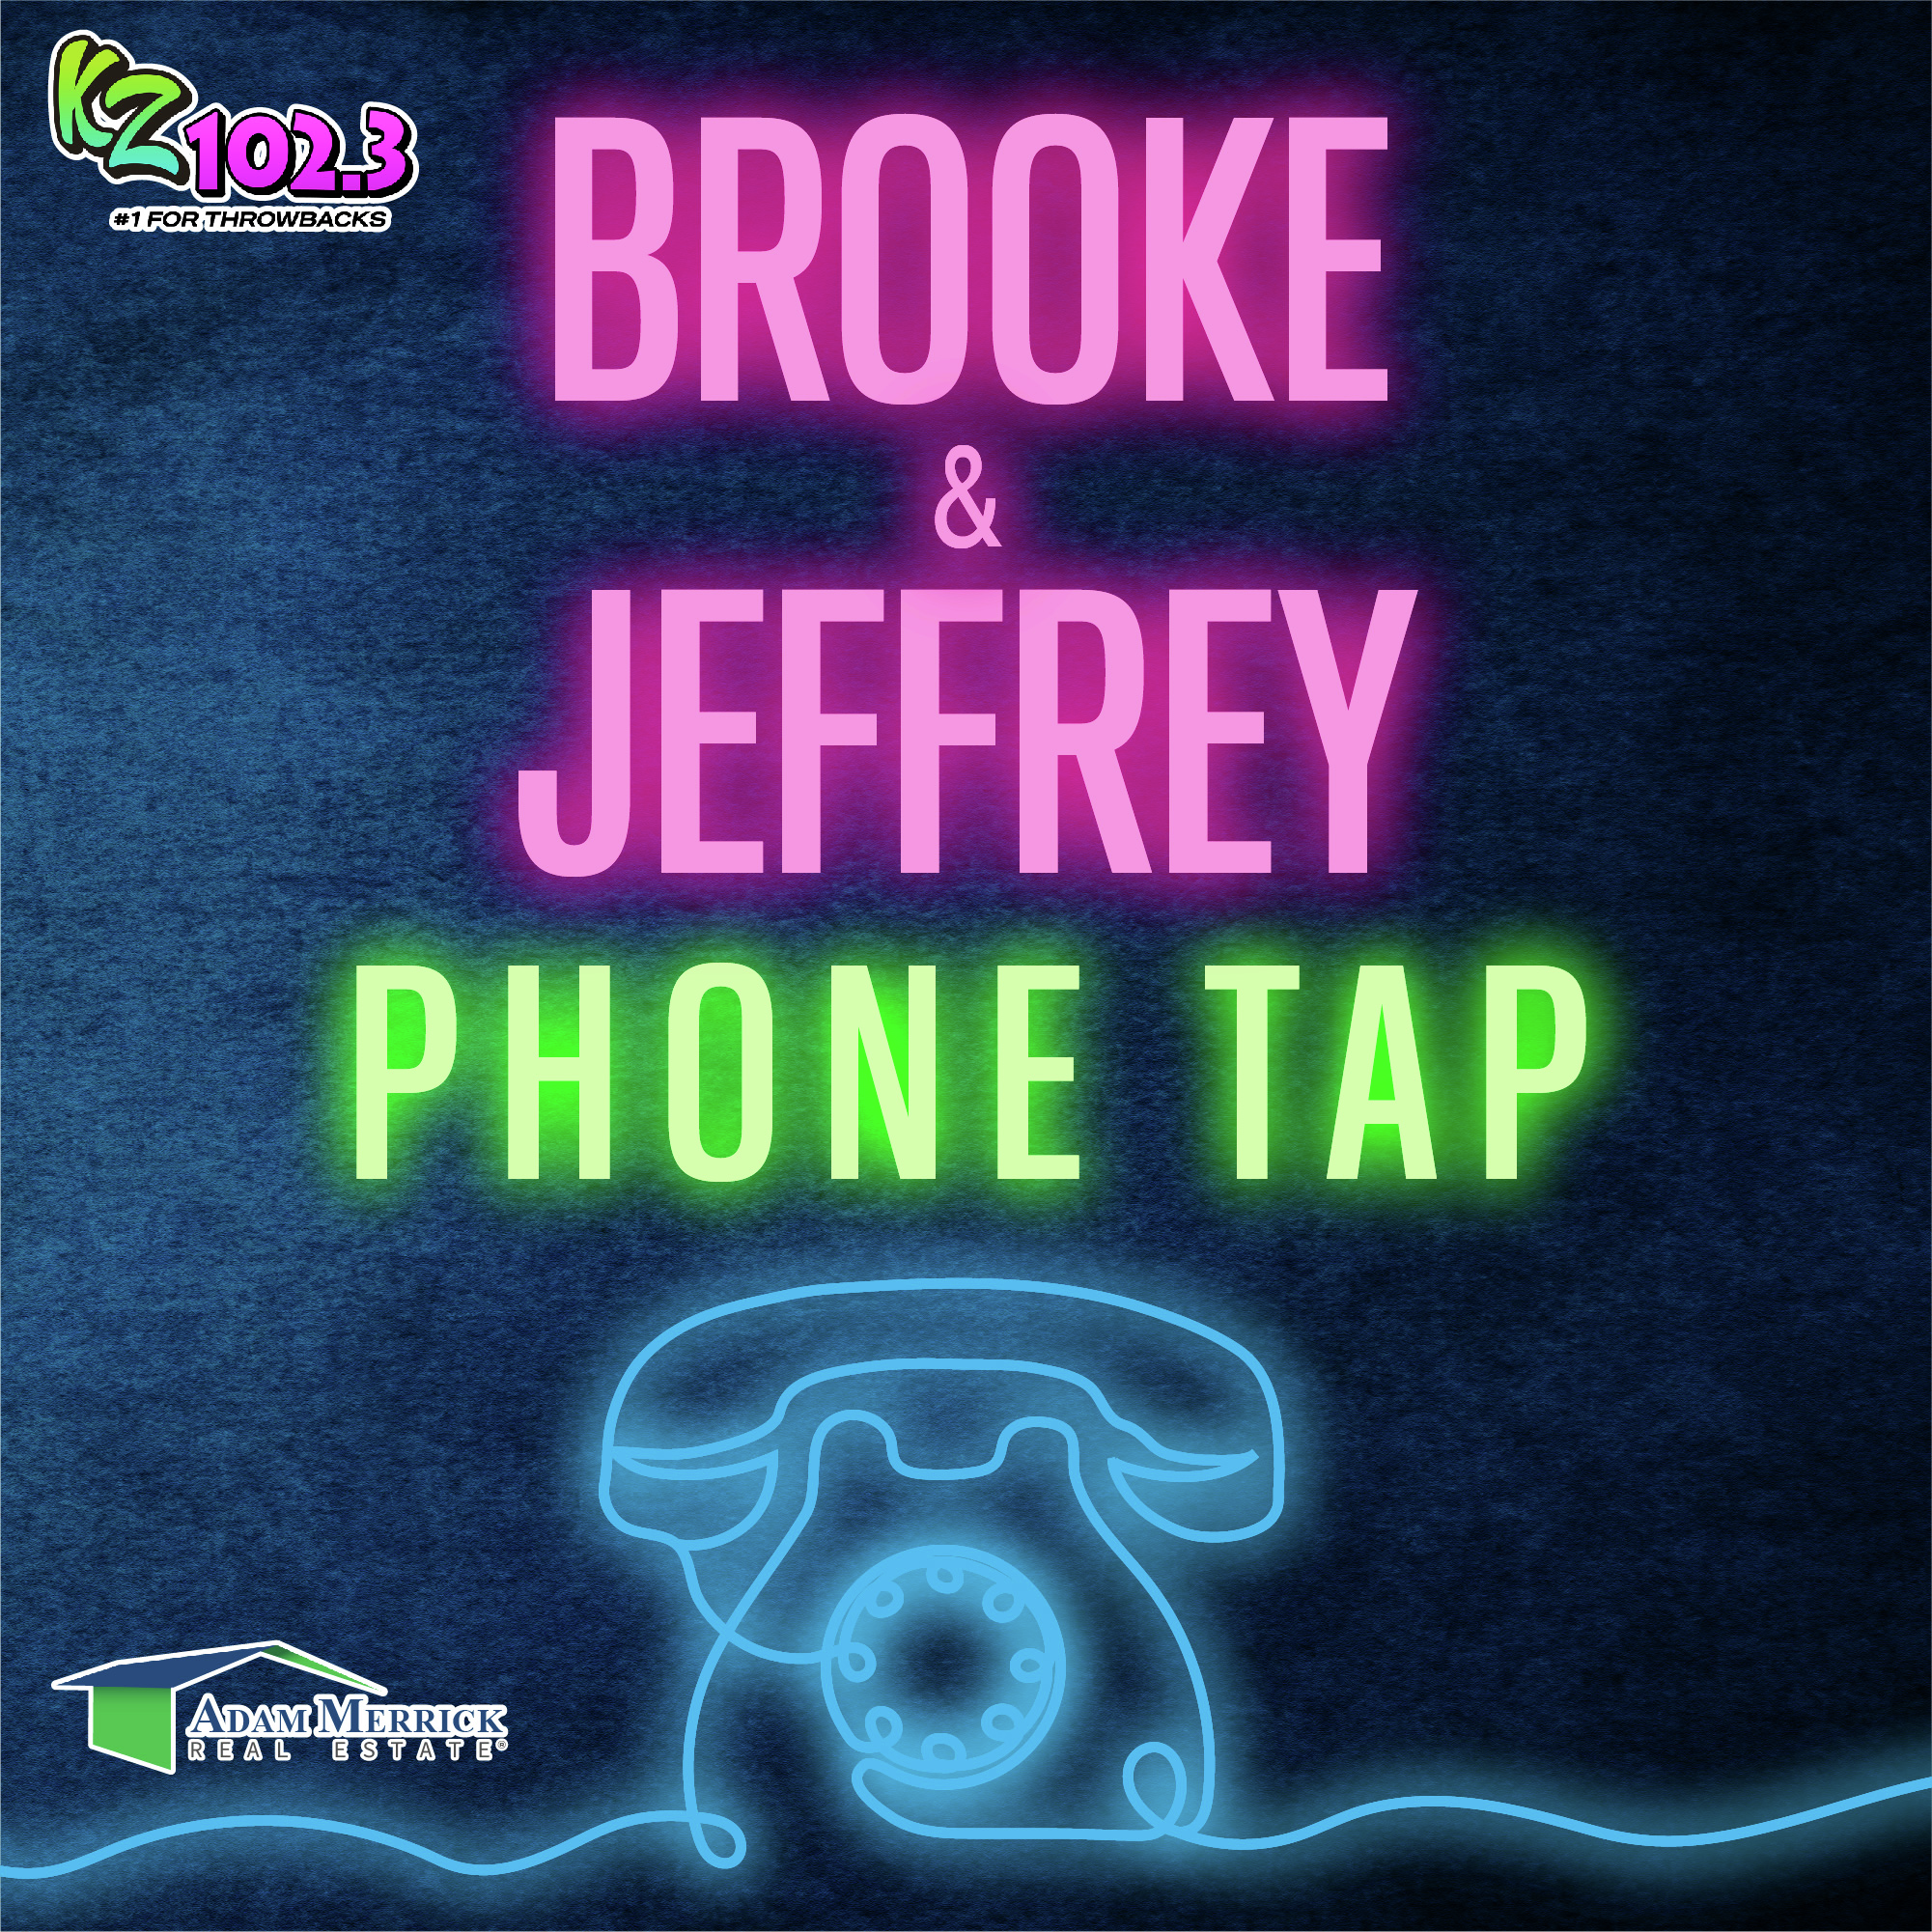 Phone Tap - Jeff (Naughty Neighbors Webshow)